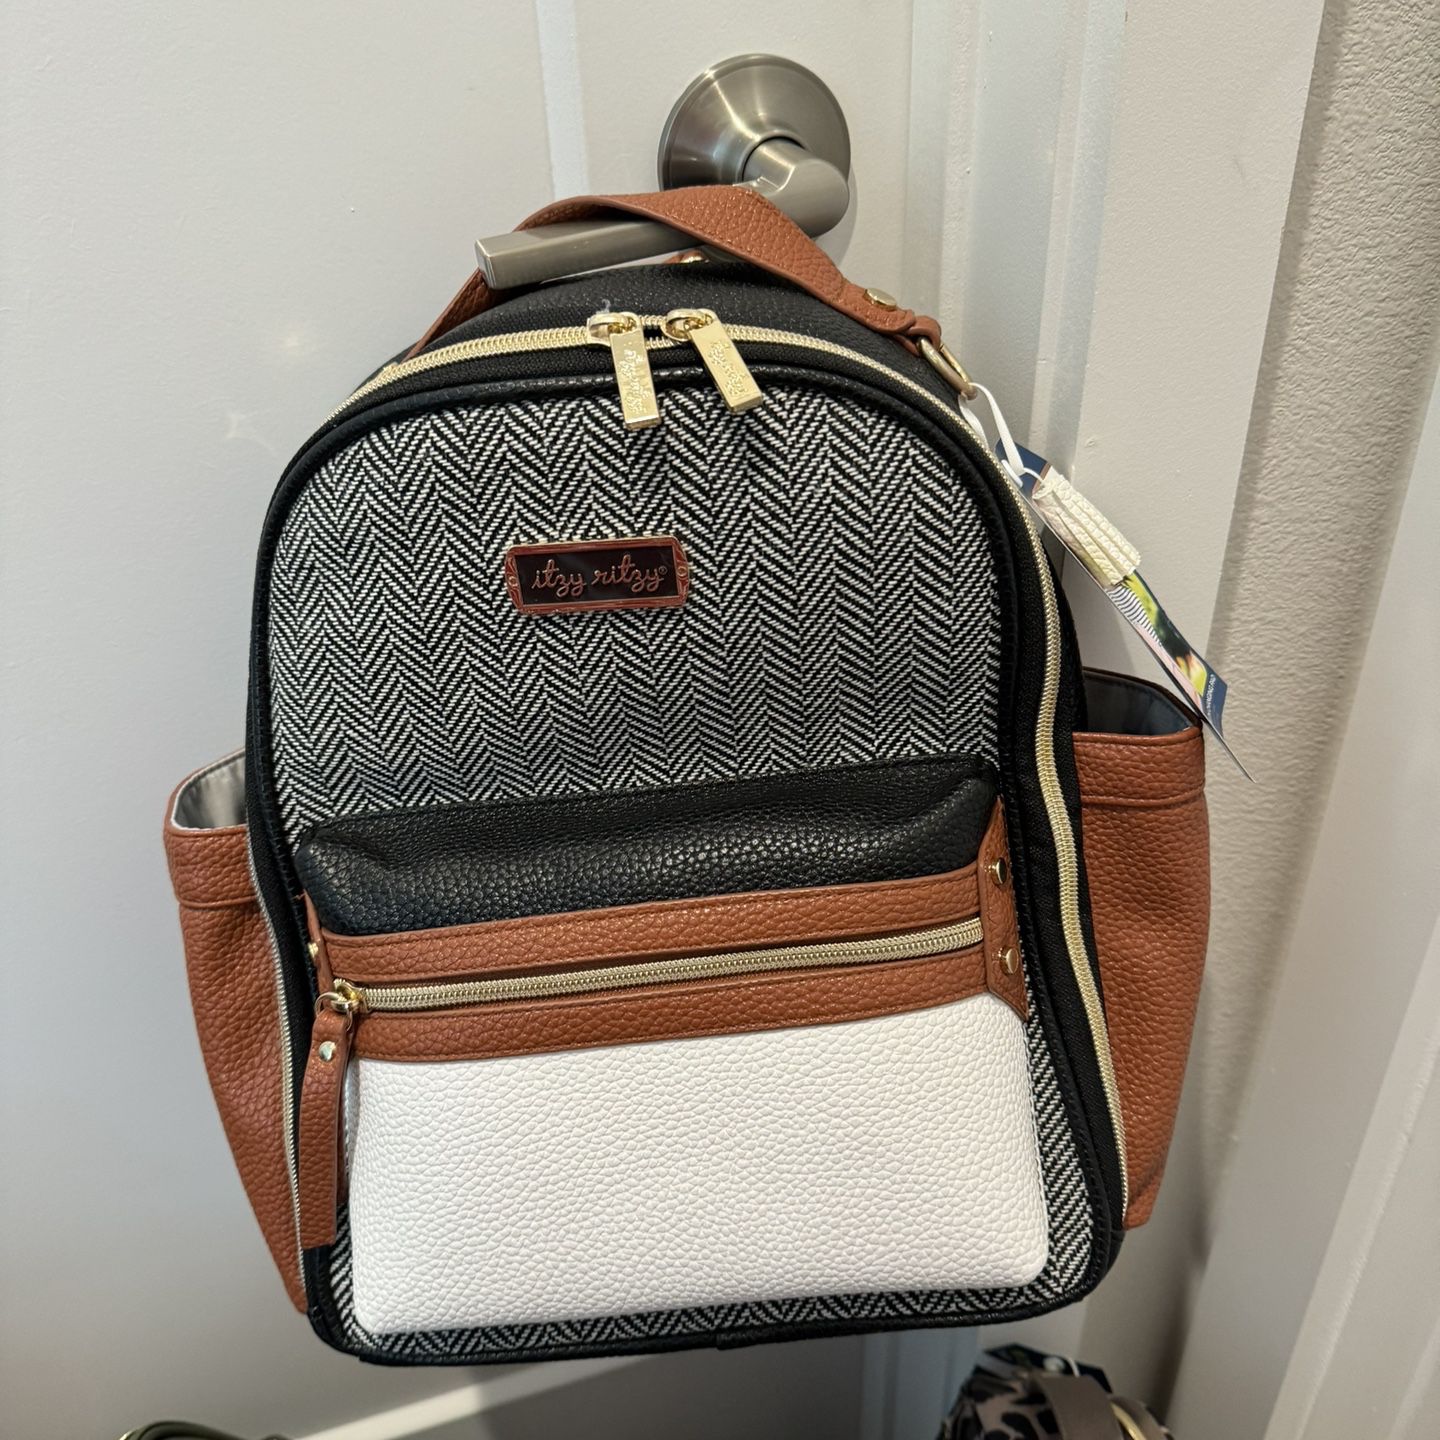 Itzy Ritzy Mini Diaper bag/Backpack BNWT